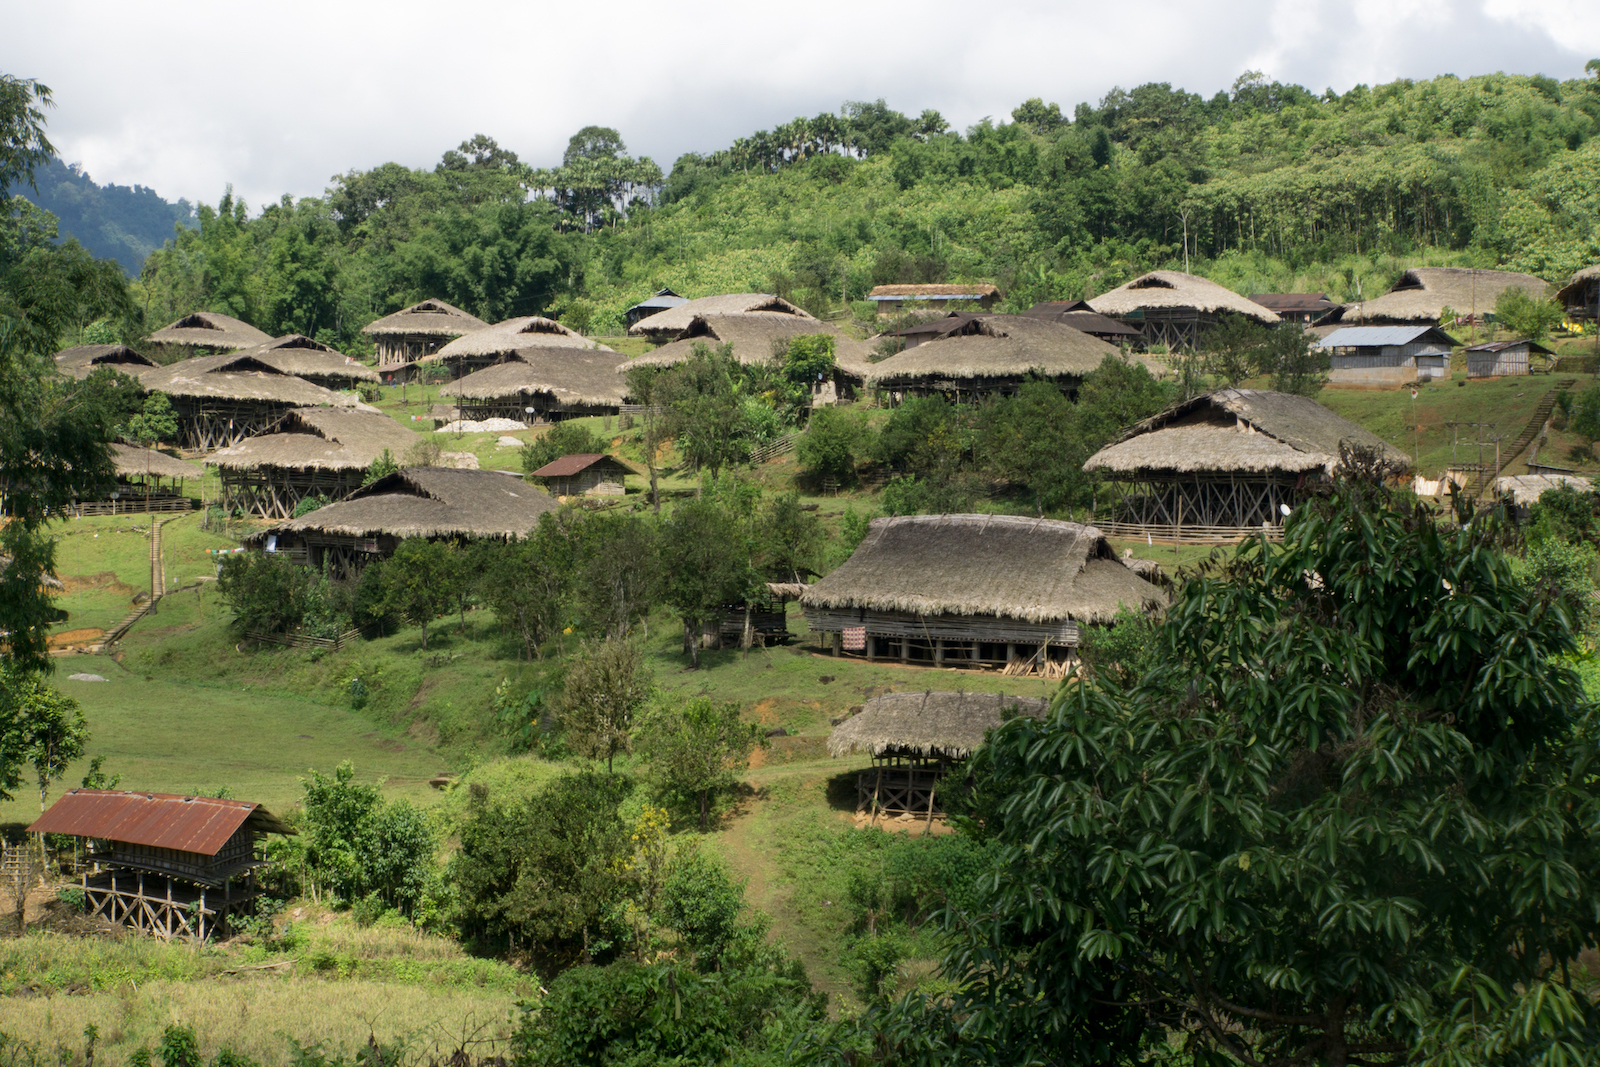 Village of Adi Tribe in Arunachal Pradesh